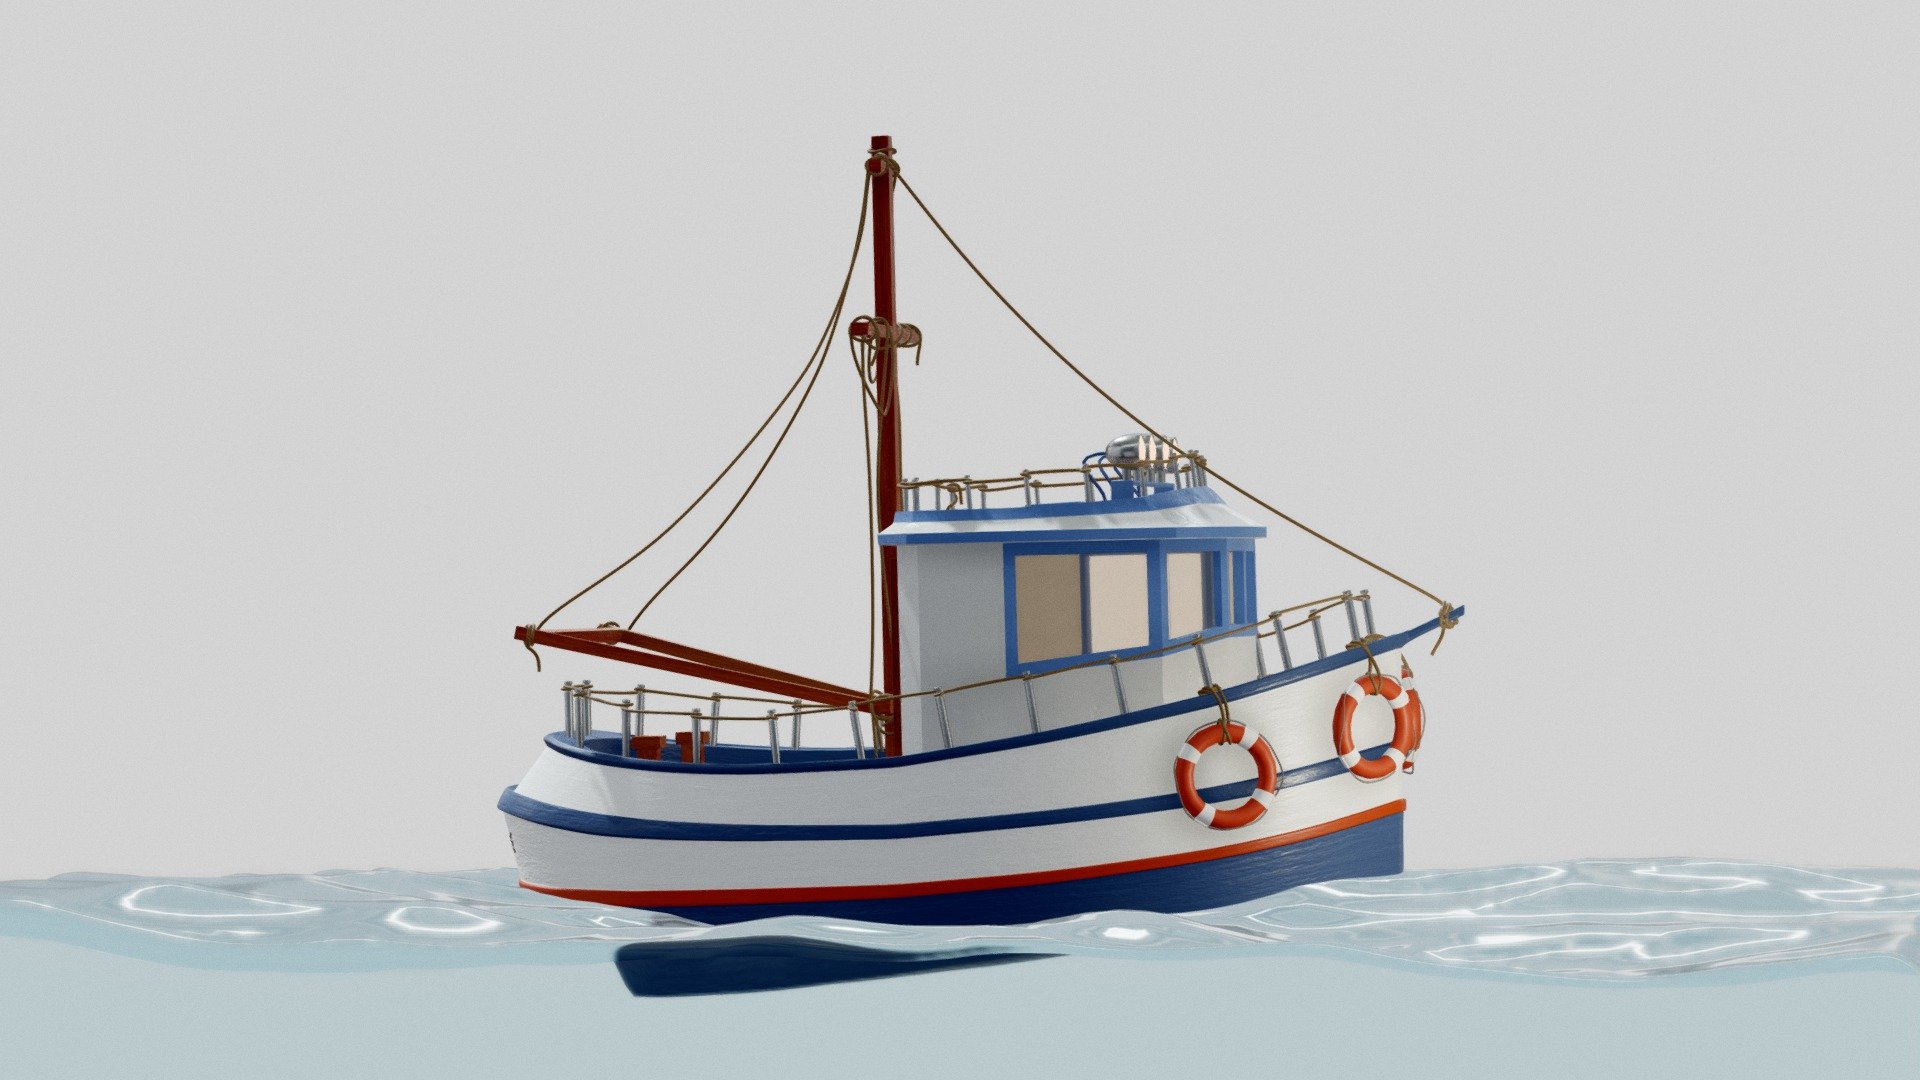 Cartoonish fishboat.
Modelled in Blender 2.83 3d model